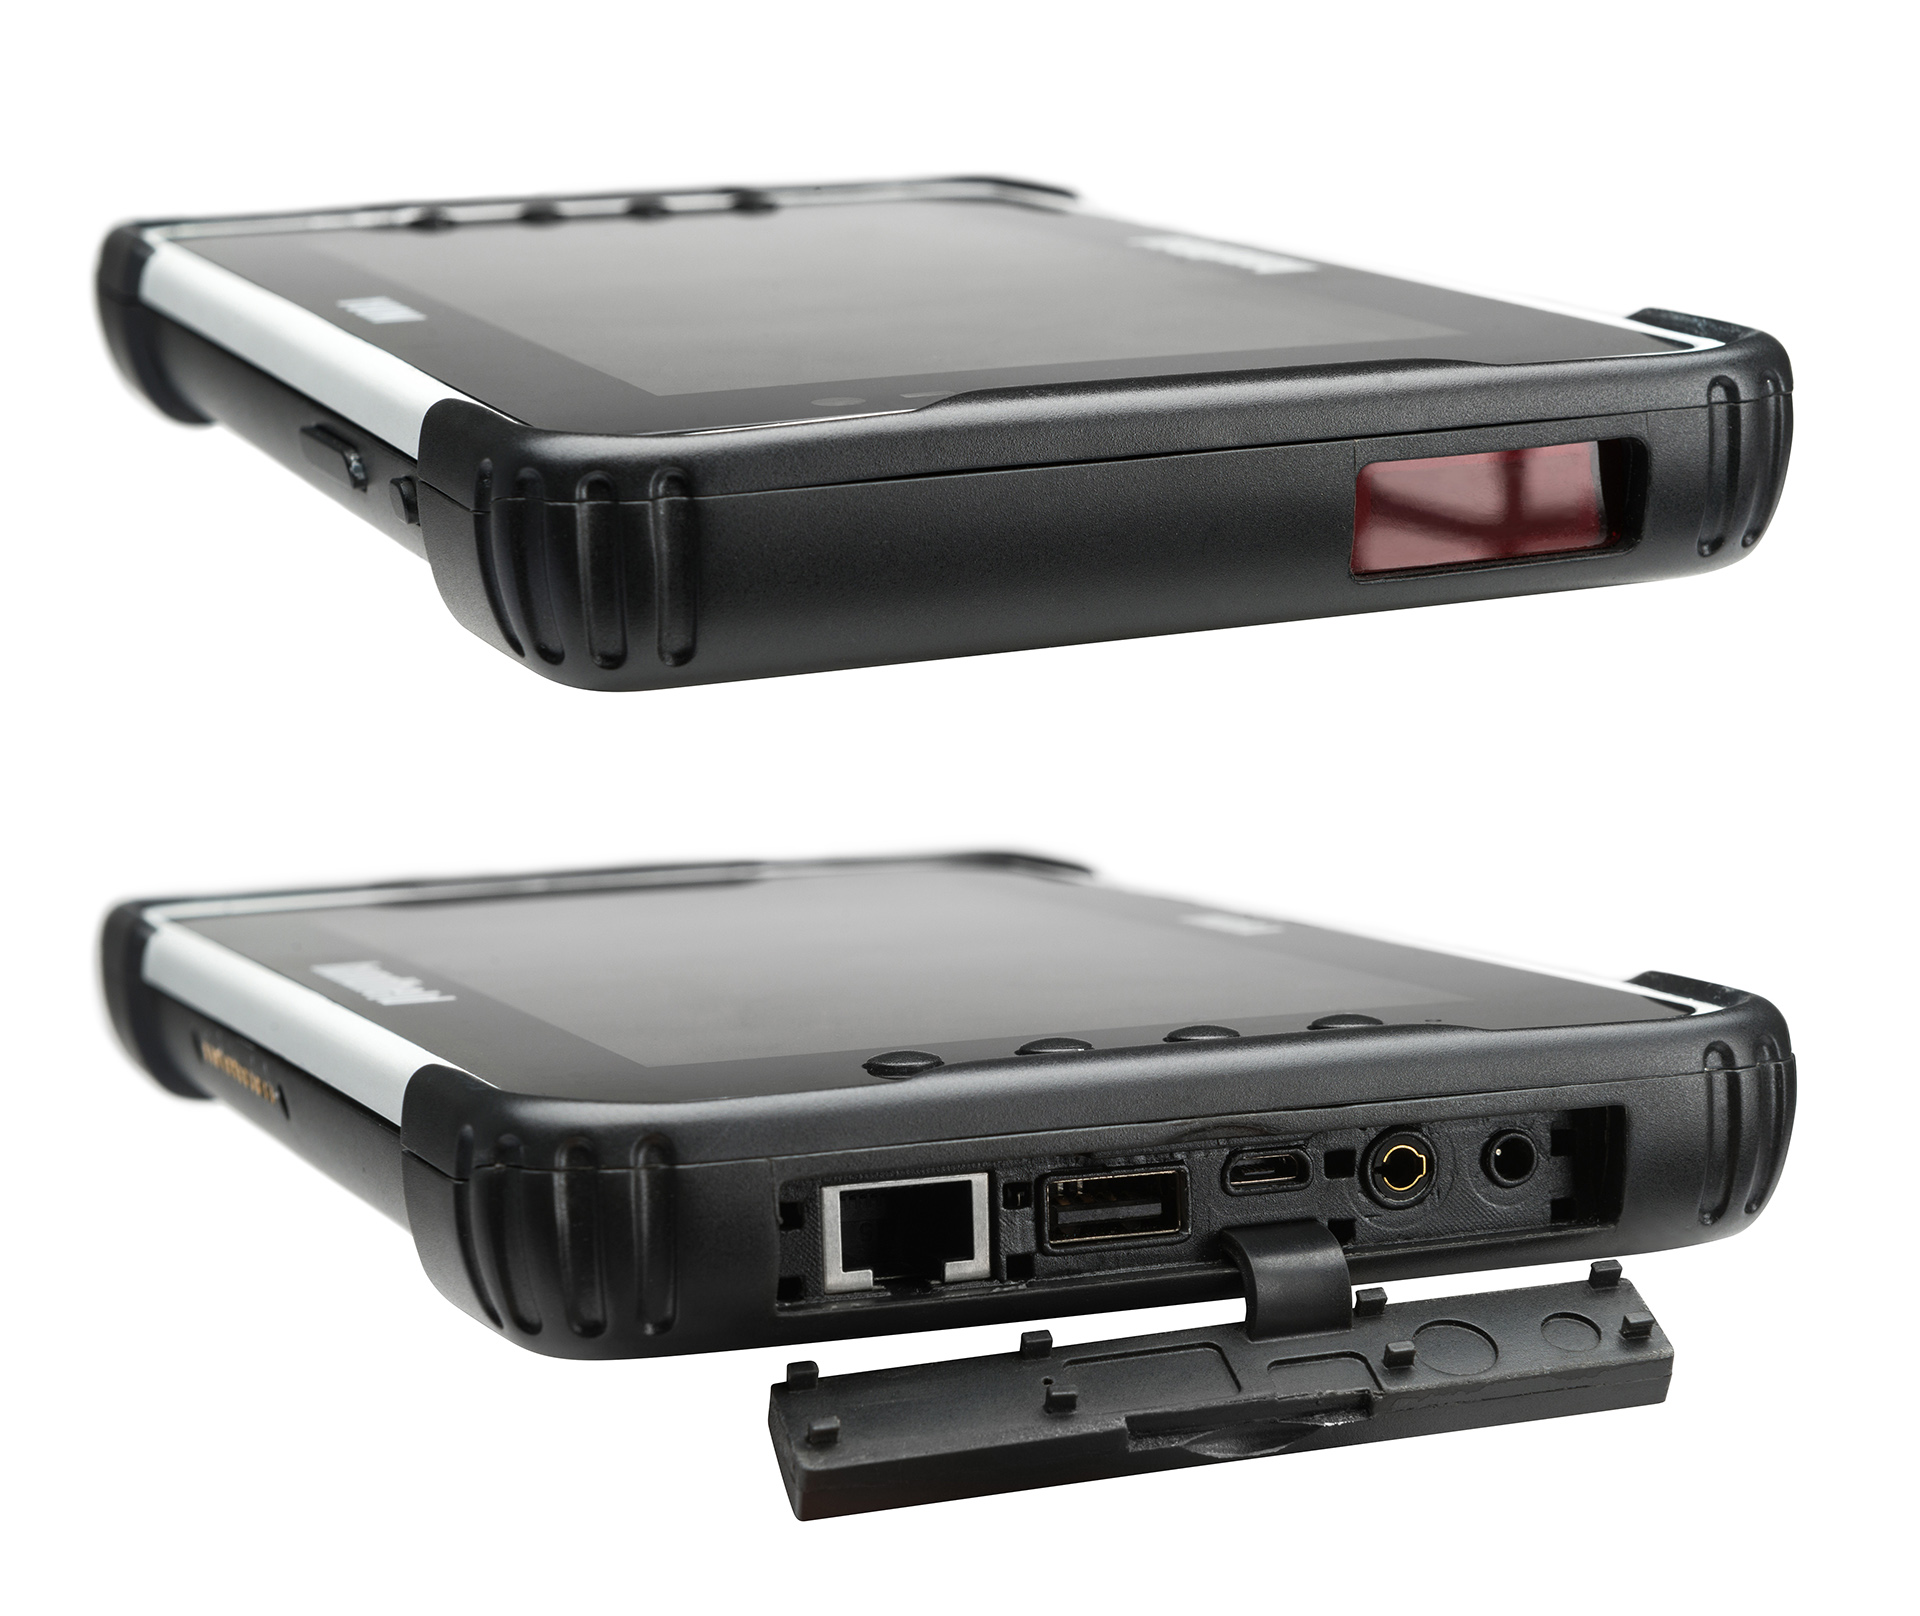 Algiz-RT7-handheld-rugged-tablet-left-and-right-side-scanning.jpg